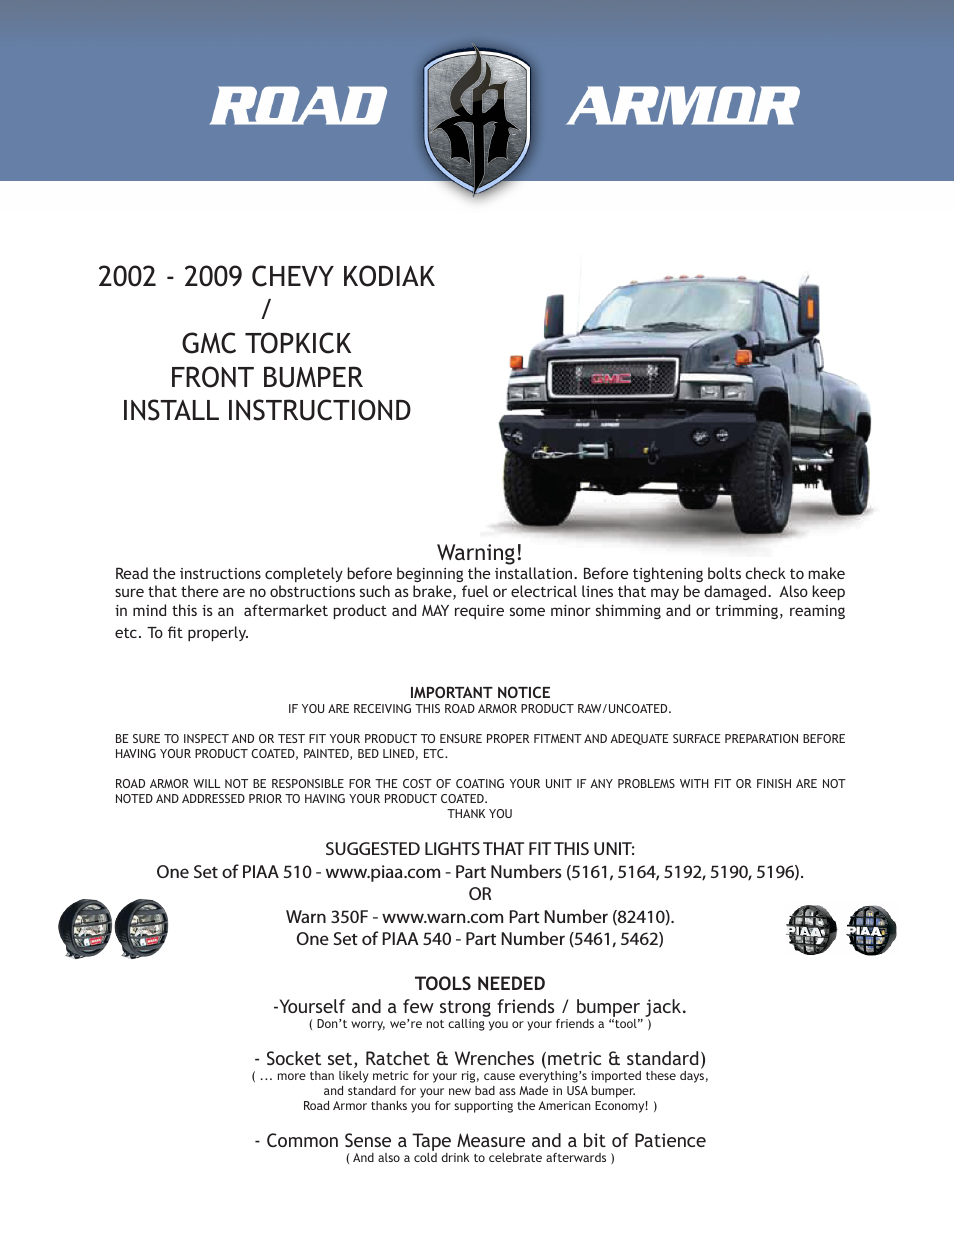 2002-2009 Chevy Kodiak Front Bumper